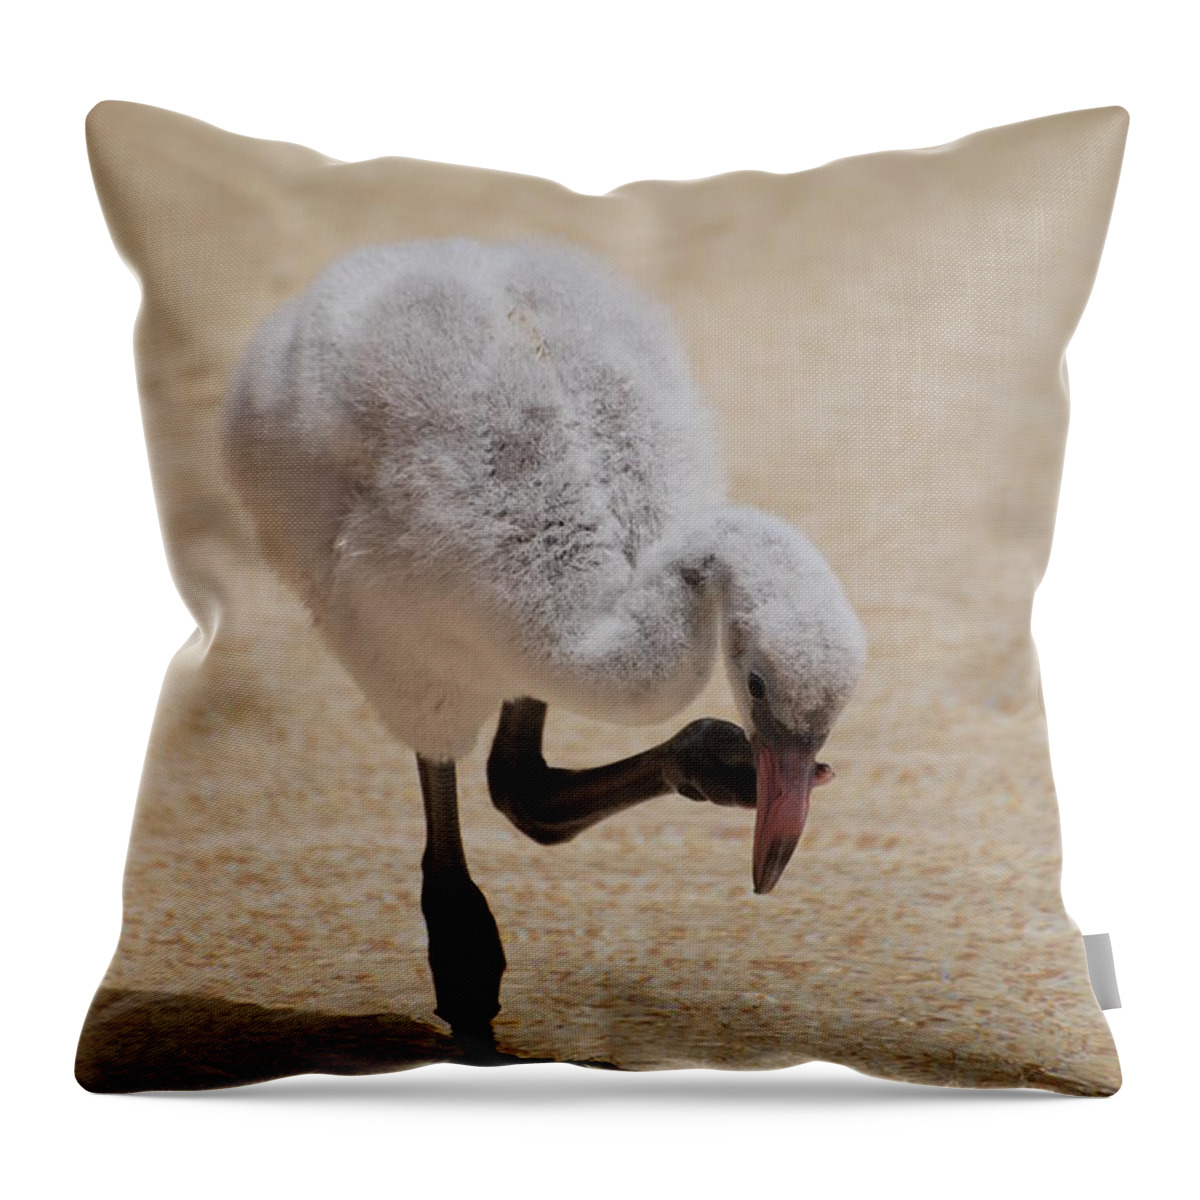 Flamingo Throw Pillow featuring the photograph Baby Flamingo by DejaVu Designs